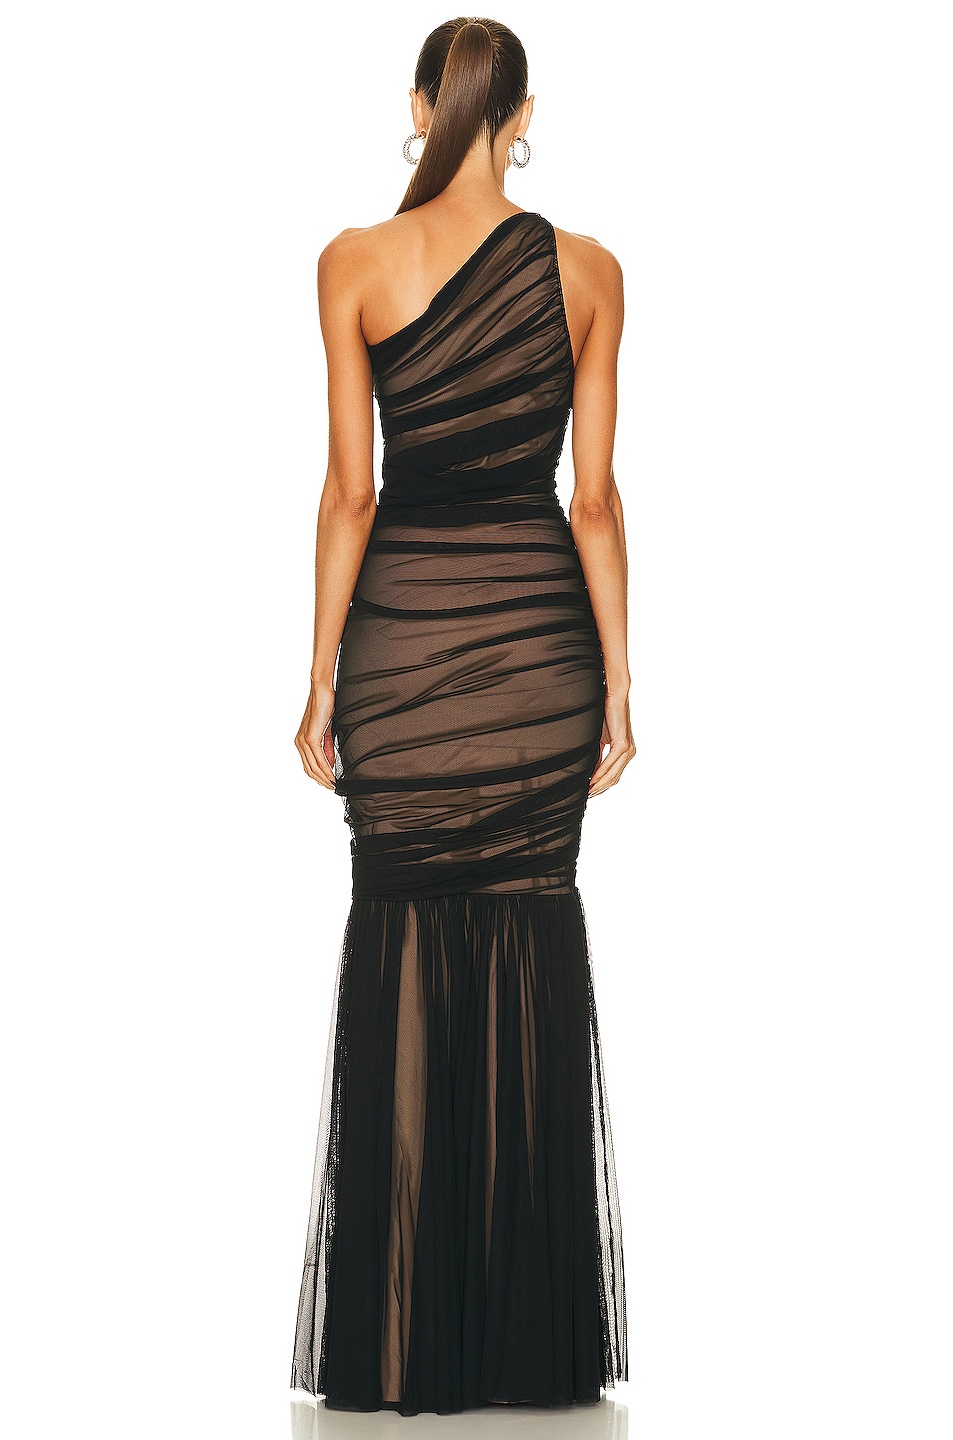 Norma Kamali Diana Fishtail Gown in Black Mesh & Nude | FWRD